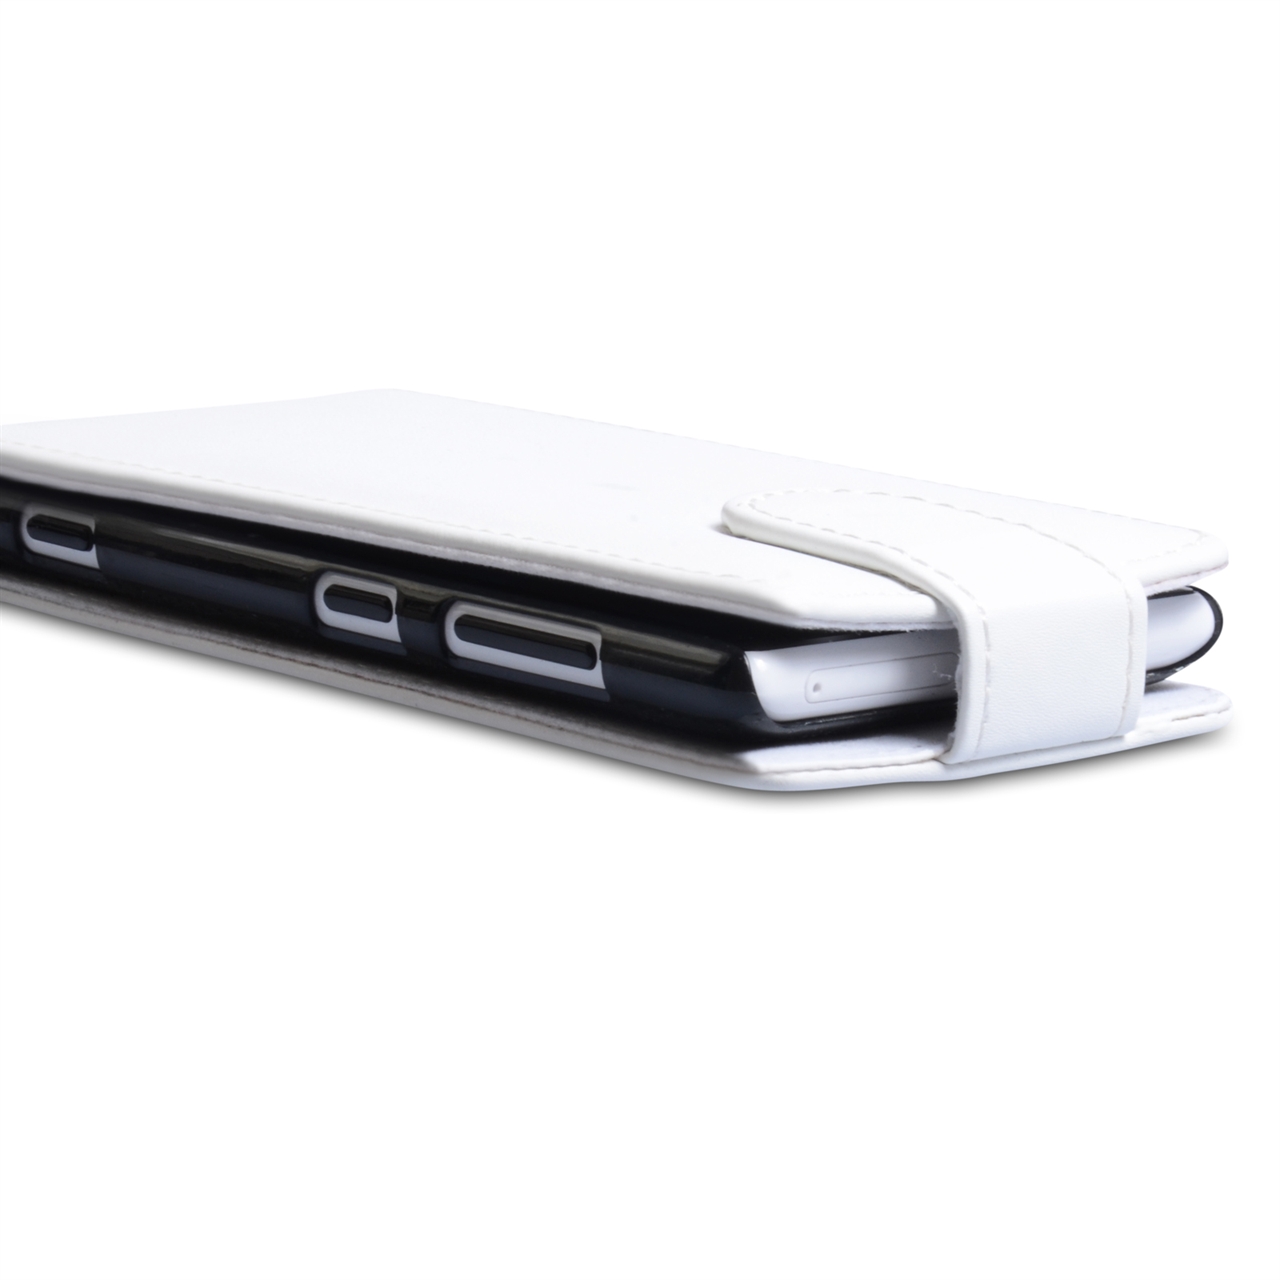 YouSave Accessories Nokia Lumia 720 Leather Effect Flip Case - White